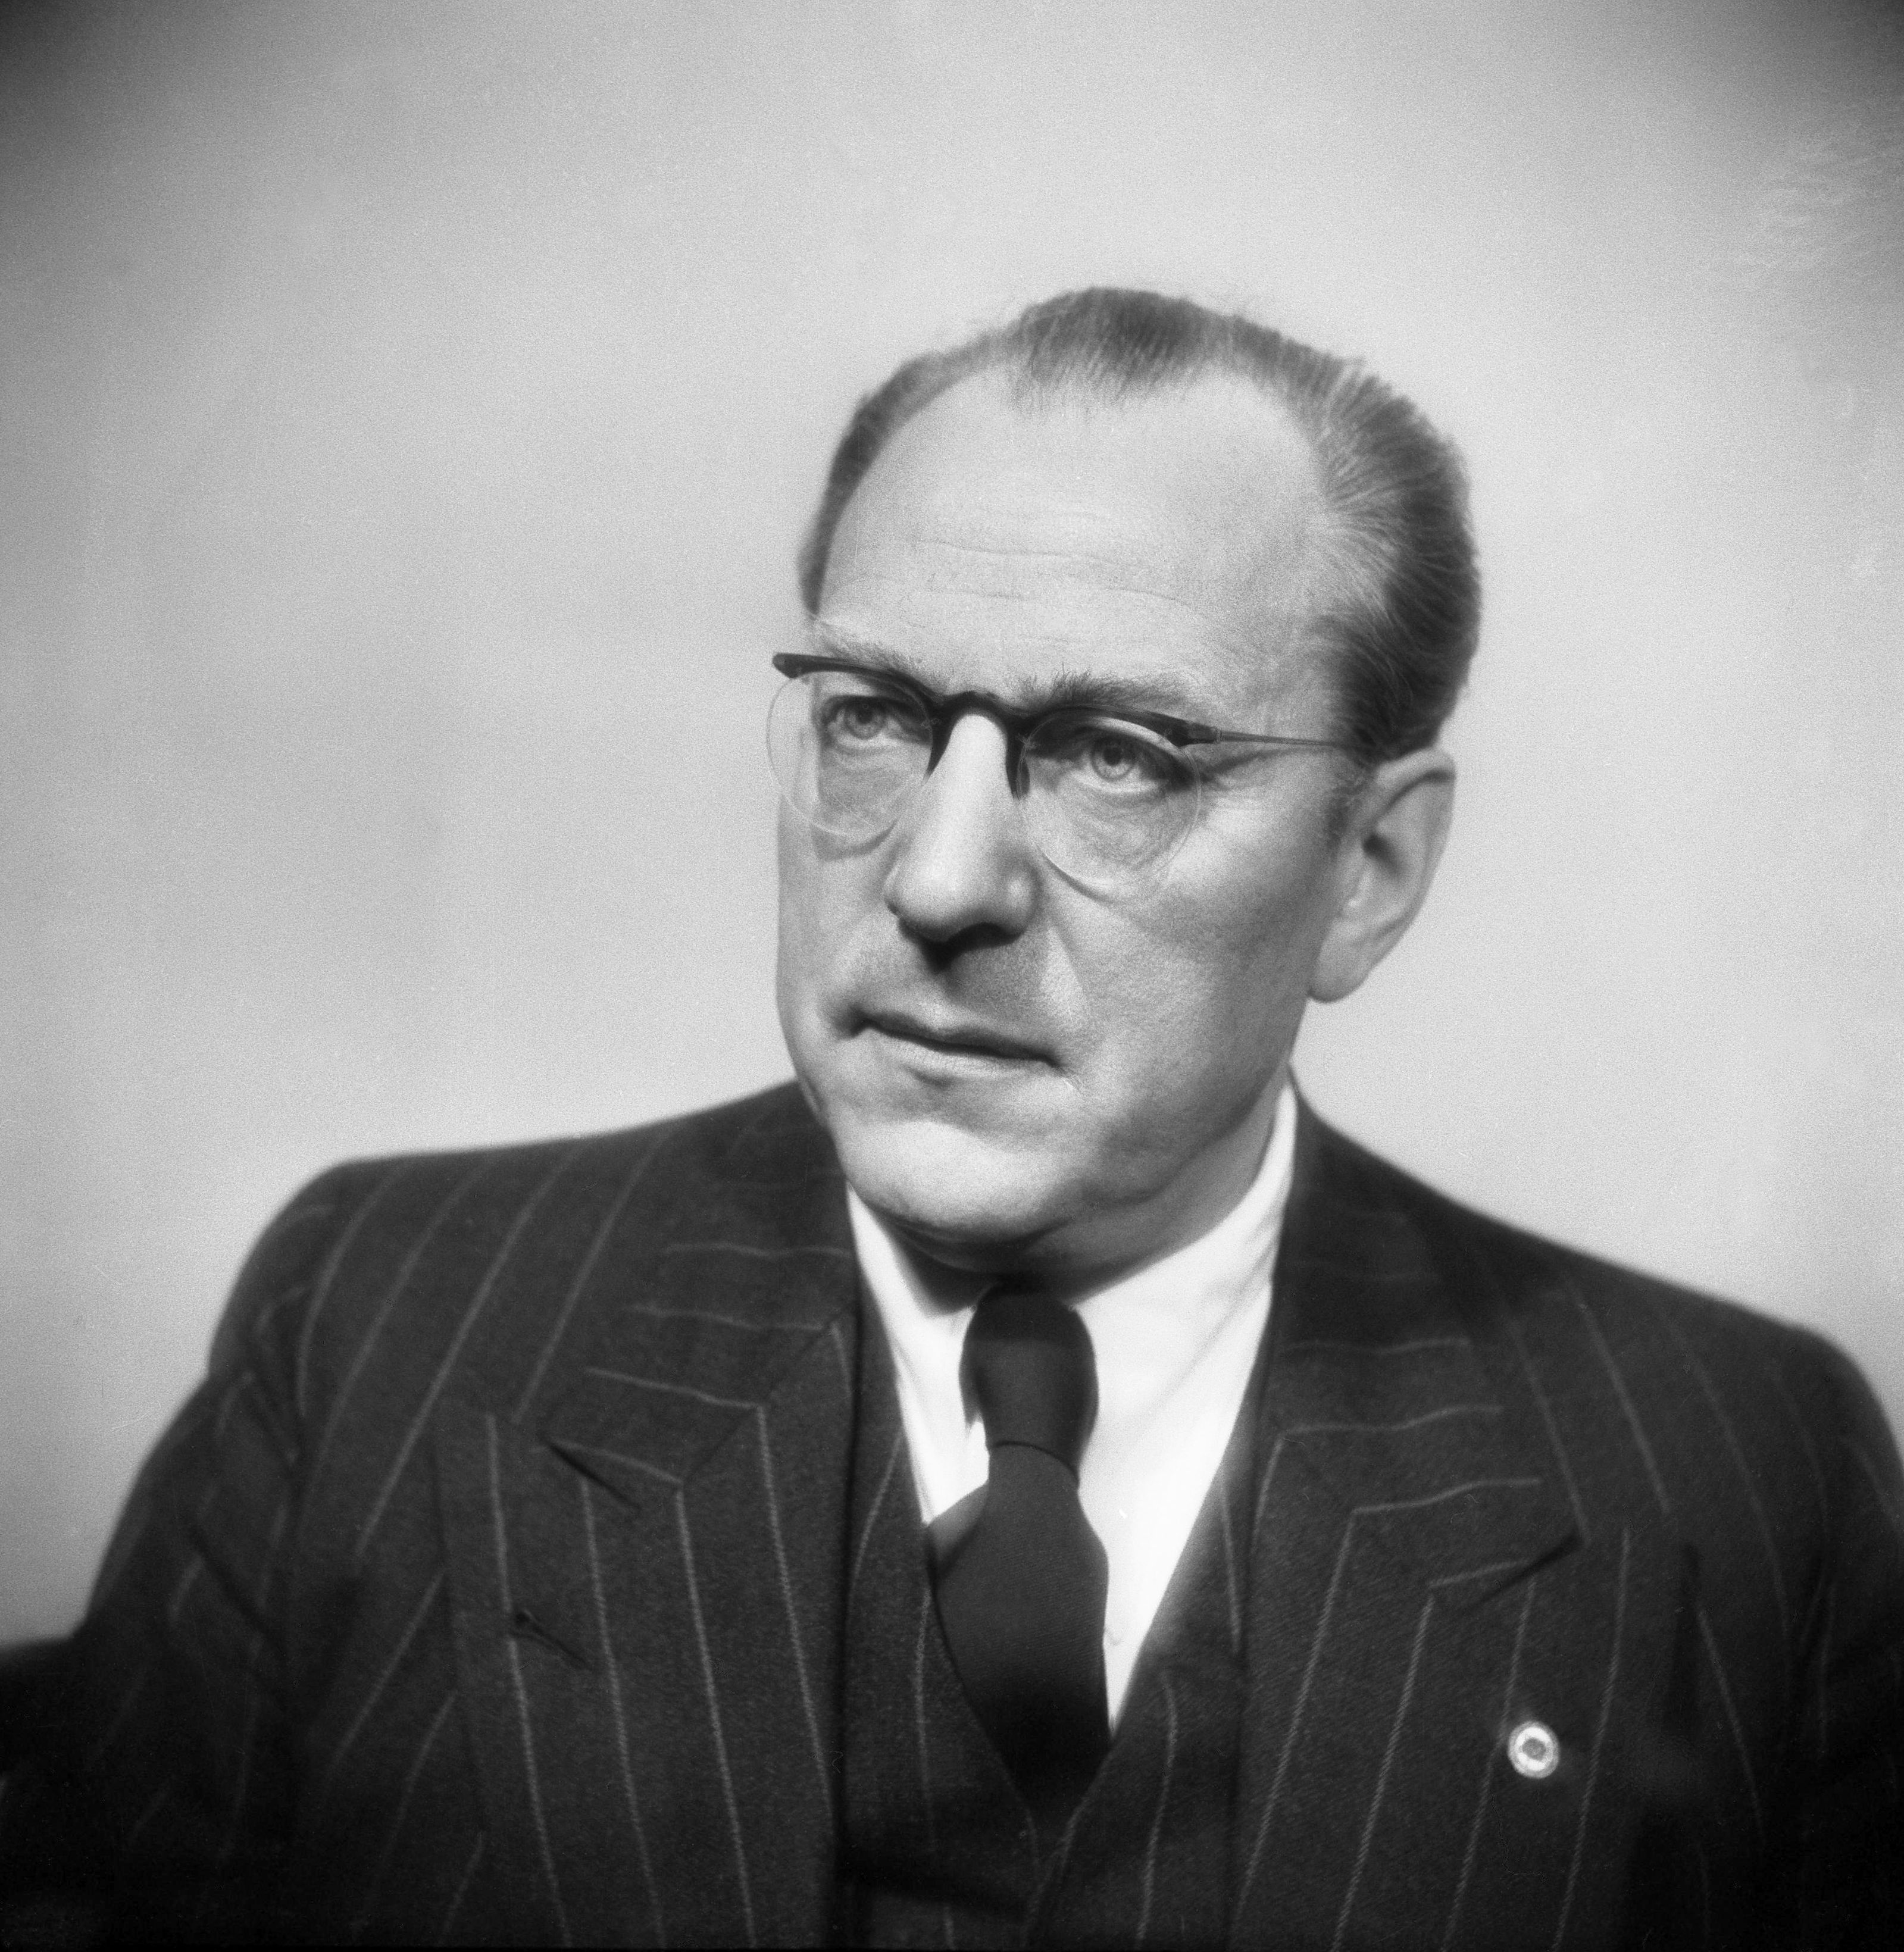 Porträtbild des SED-Politikers Otto Grotewohl, 1950.